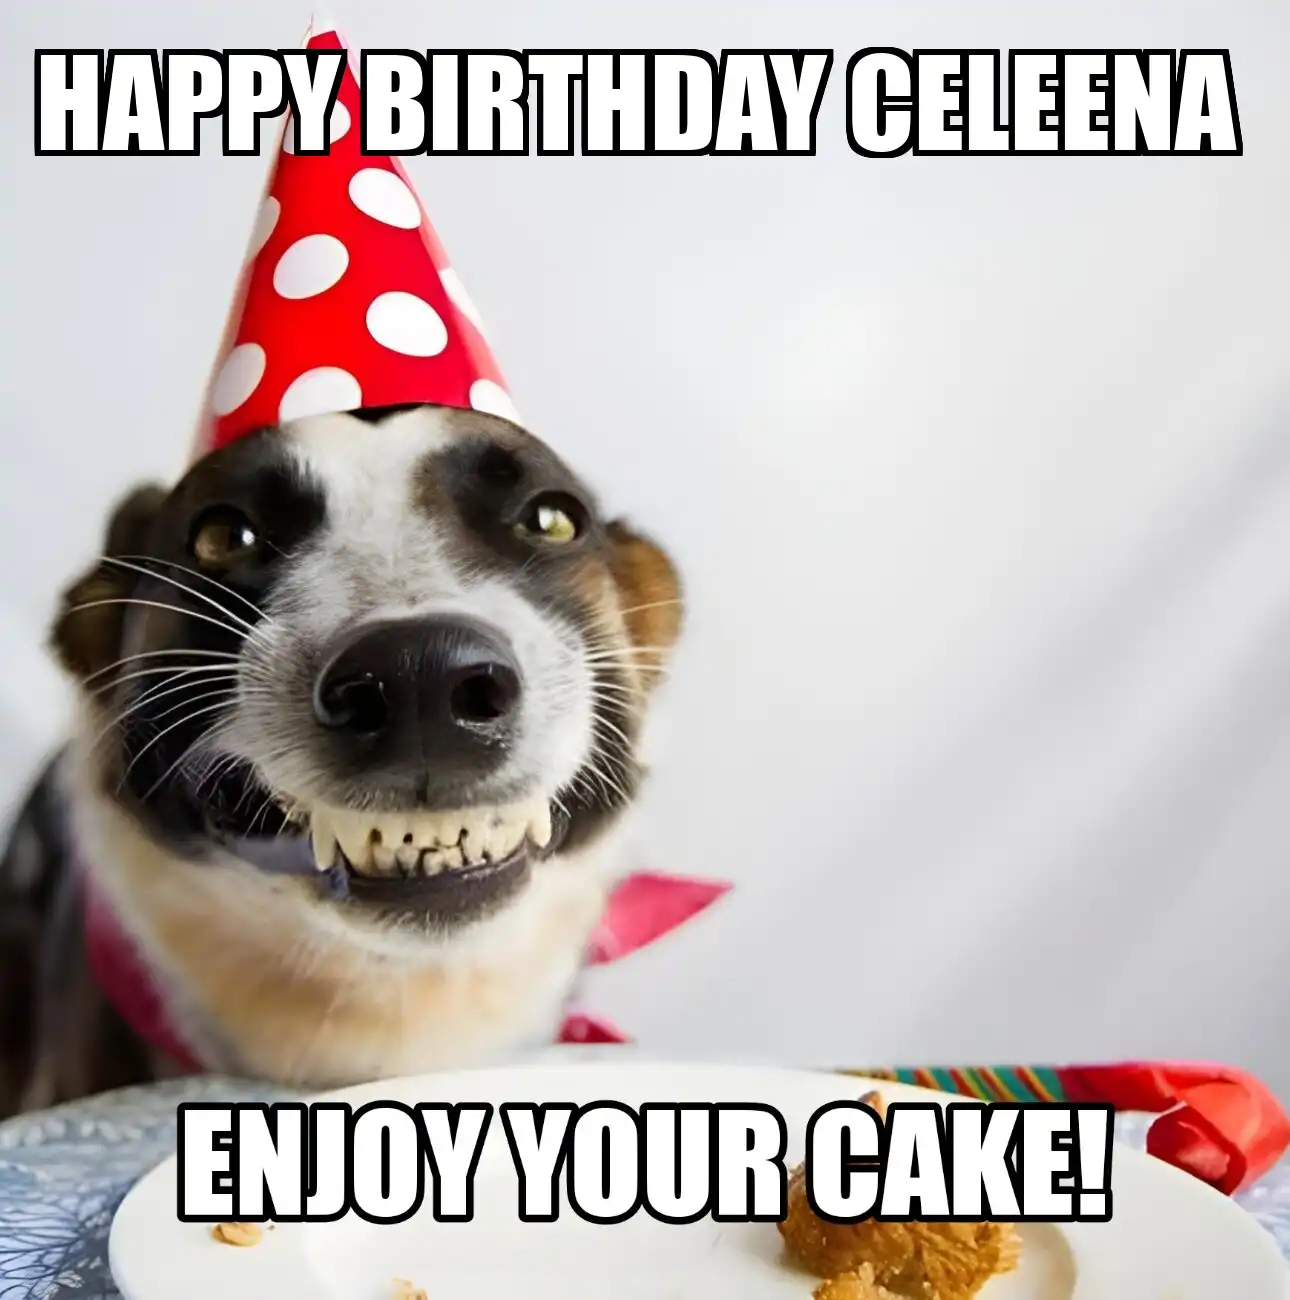 Happy Birthday Celeena Enjoy Your Cake Dog Meme